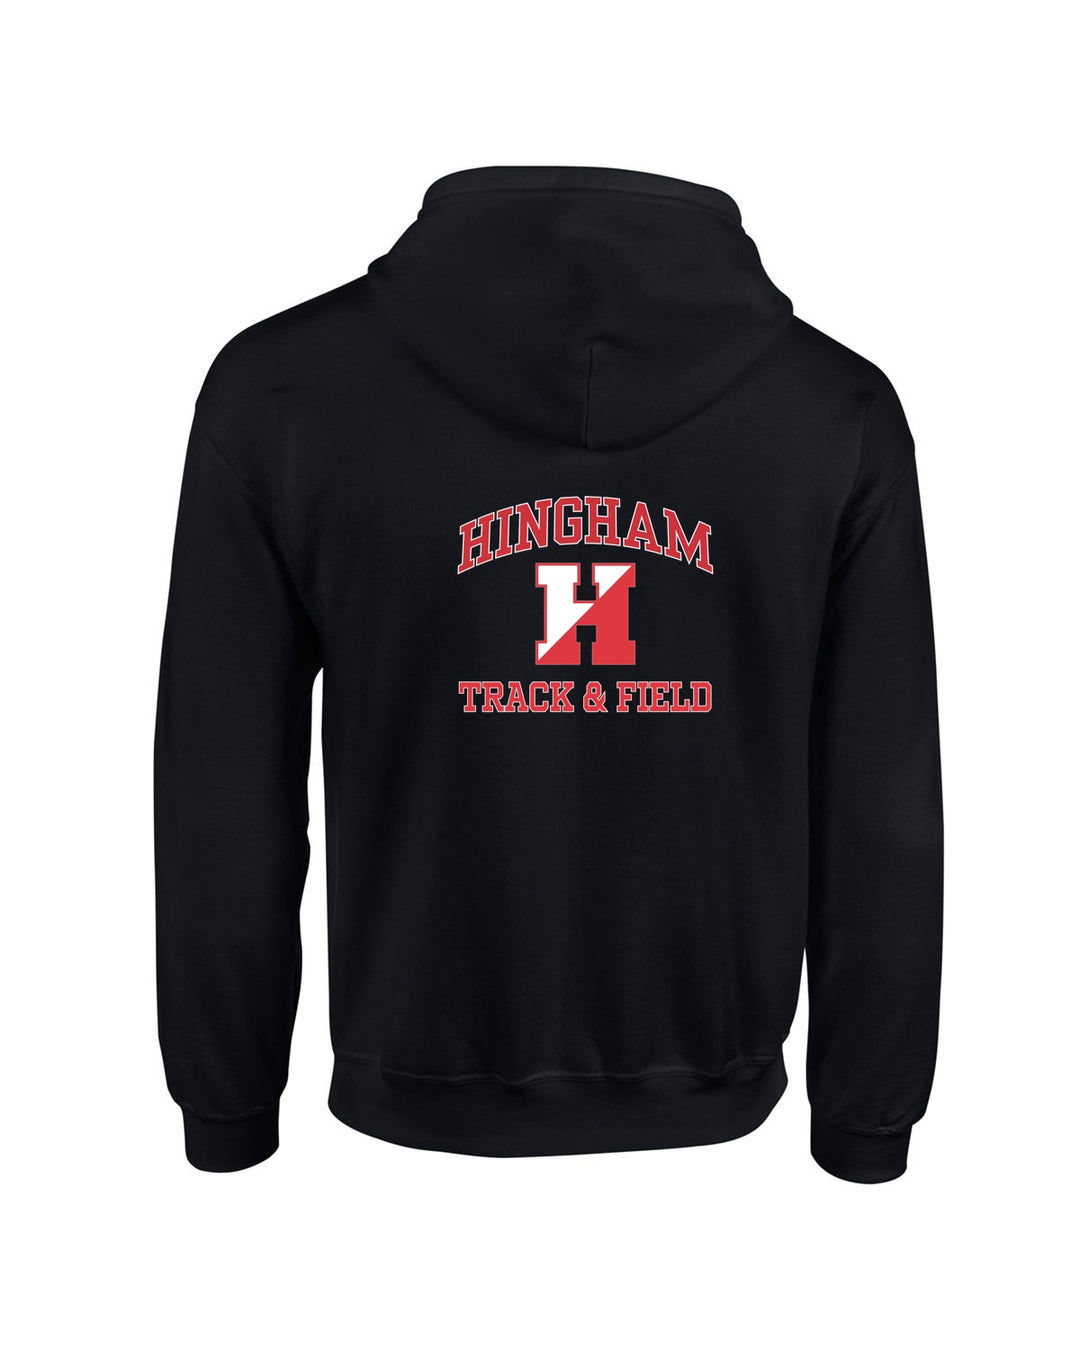 Hingham Winter Track - Gildan Full Hooded Sweatshirt (G186)